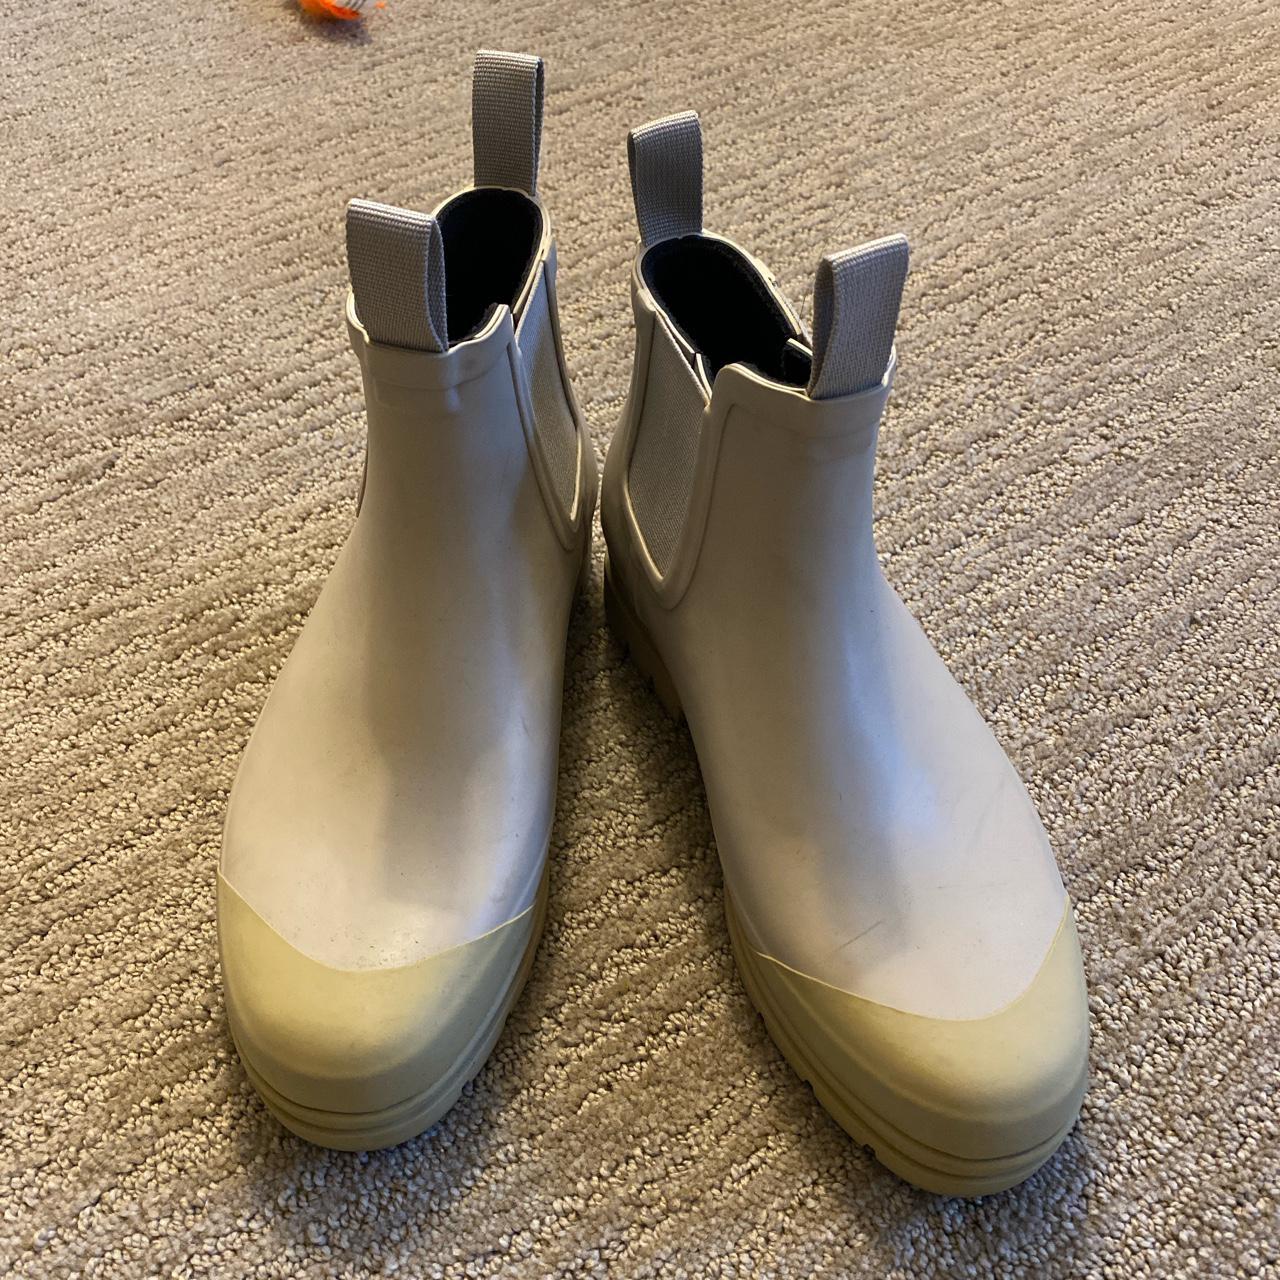 Everlane rain boots size 7 in grey & beige 💗 these... - Depop